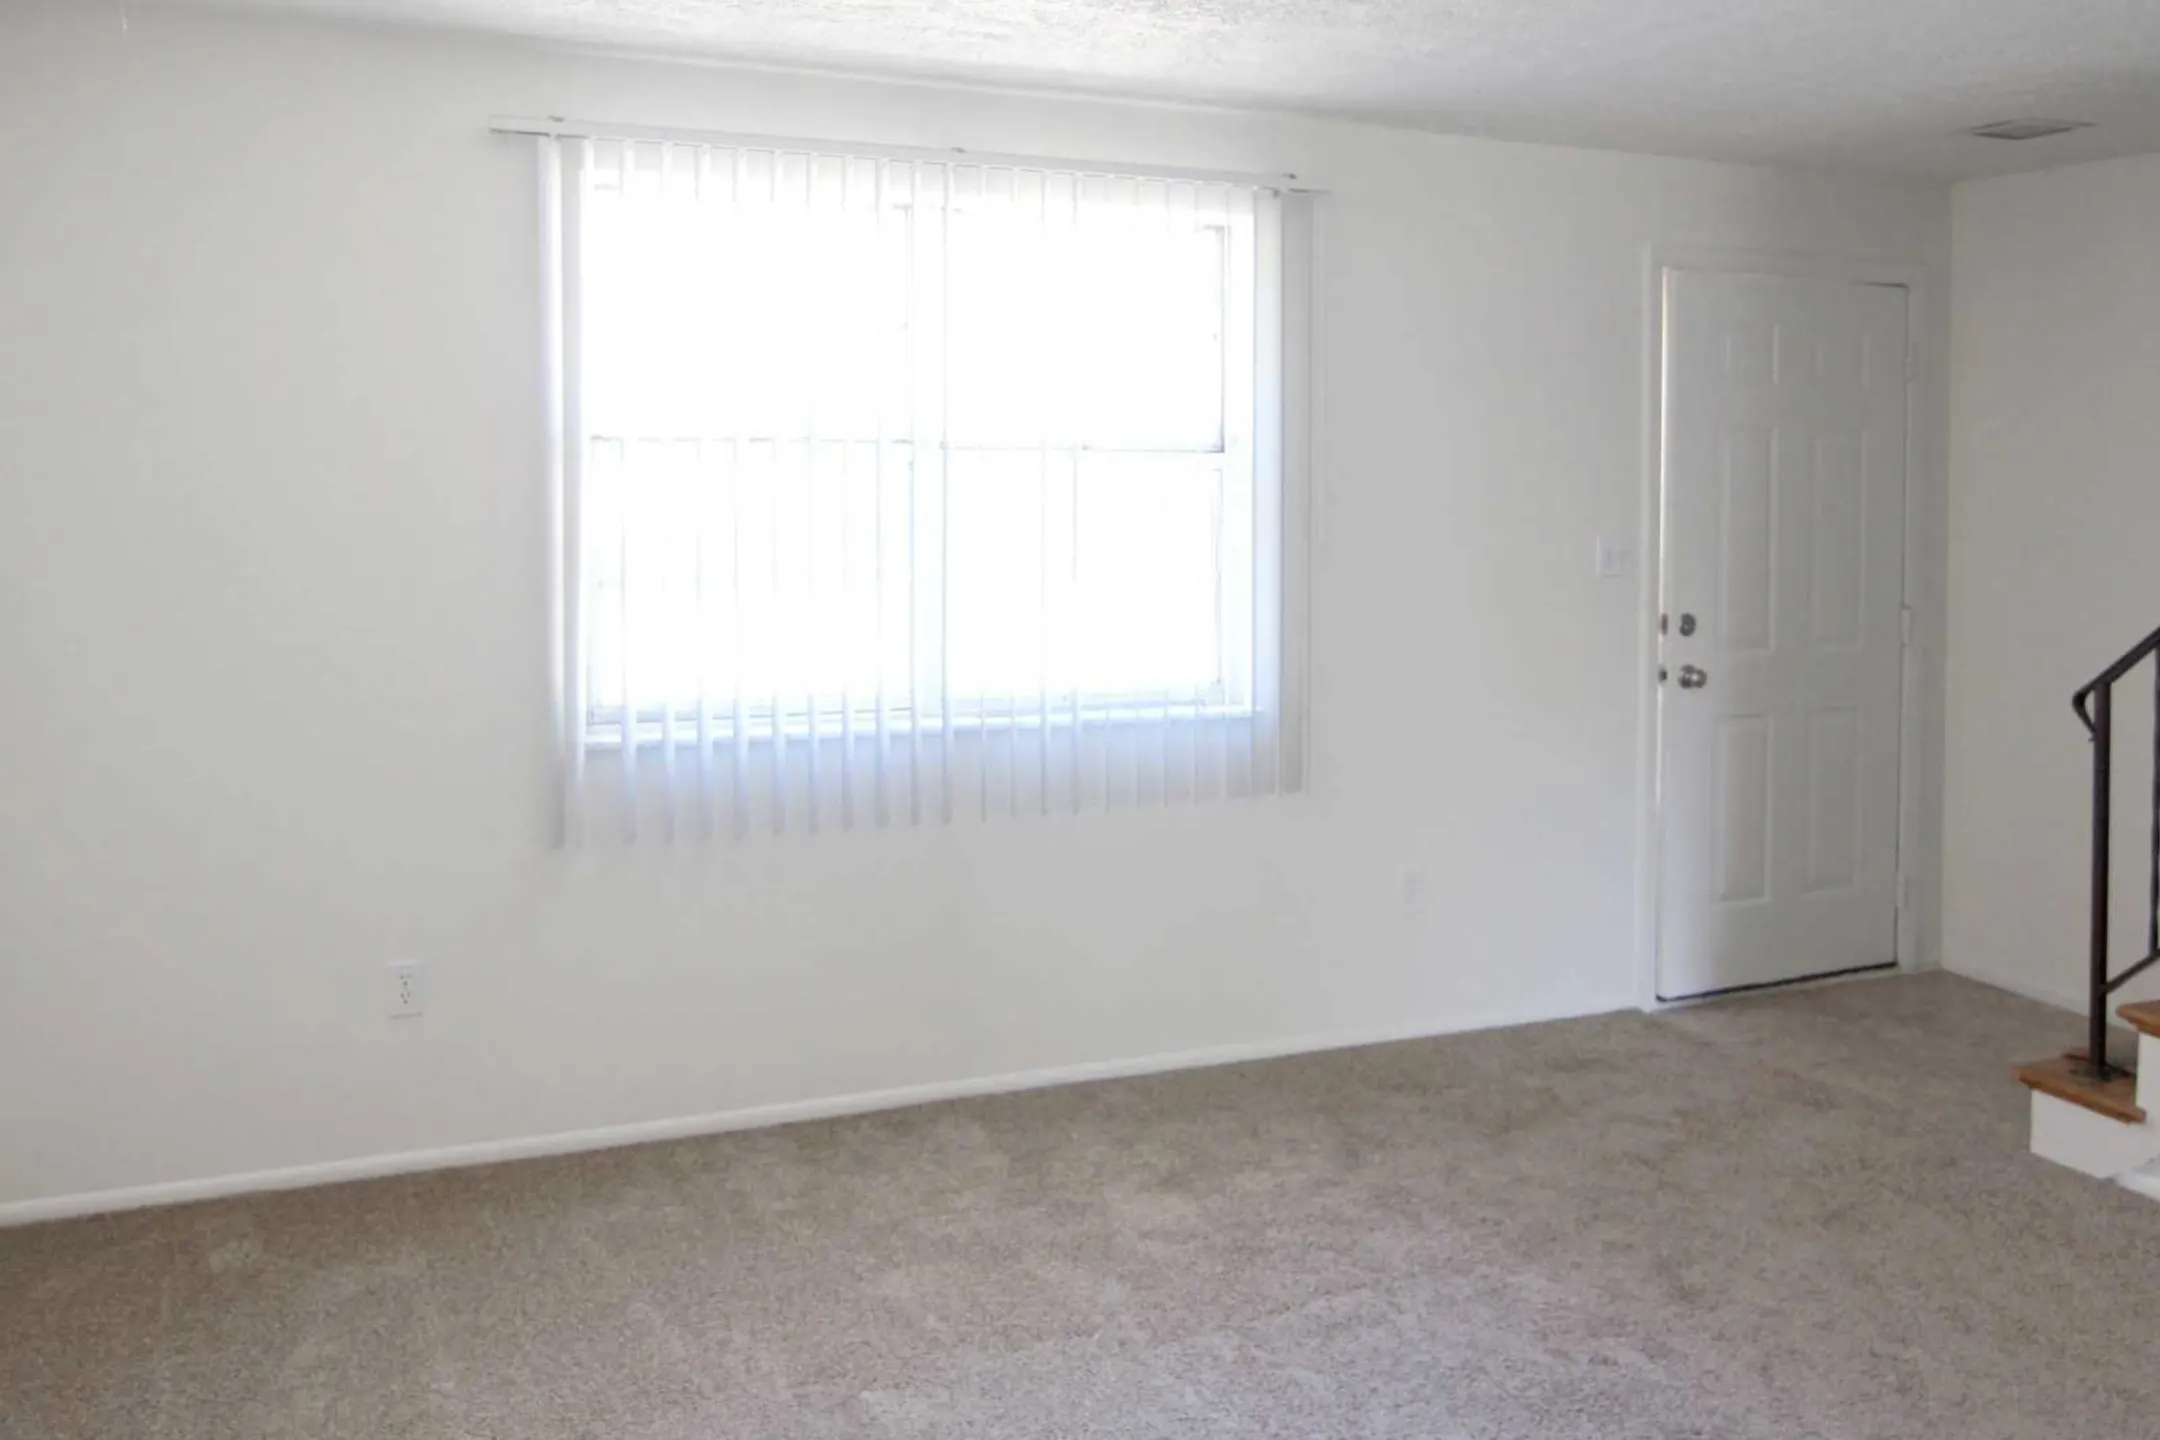 Living Room - Broadmoor Apartments - Dayton, OH